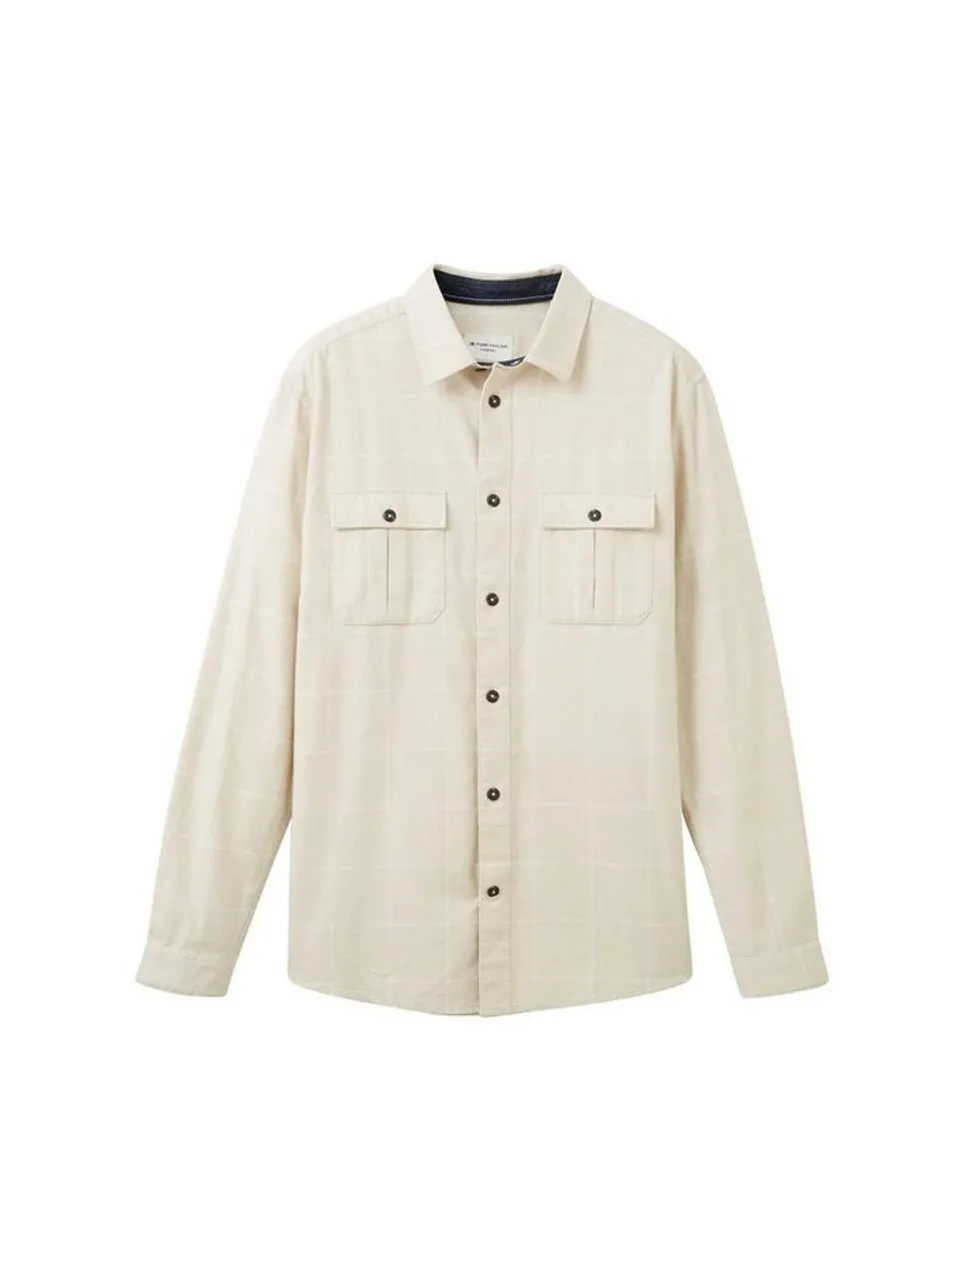 TOM TAILOR T-Shirt comfort tonal checked shirt, vintage beige tonal check